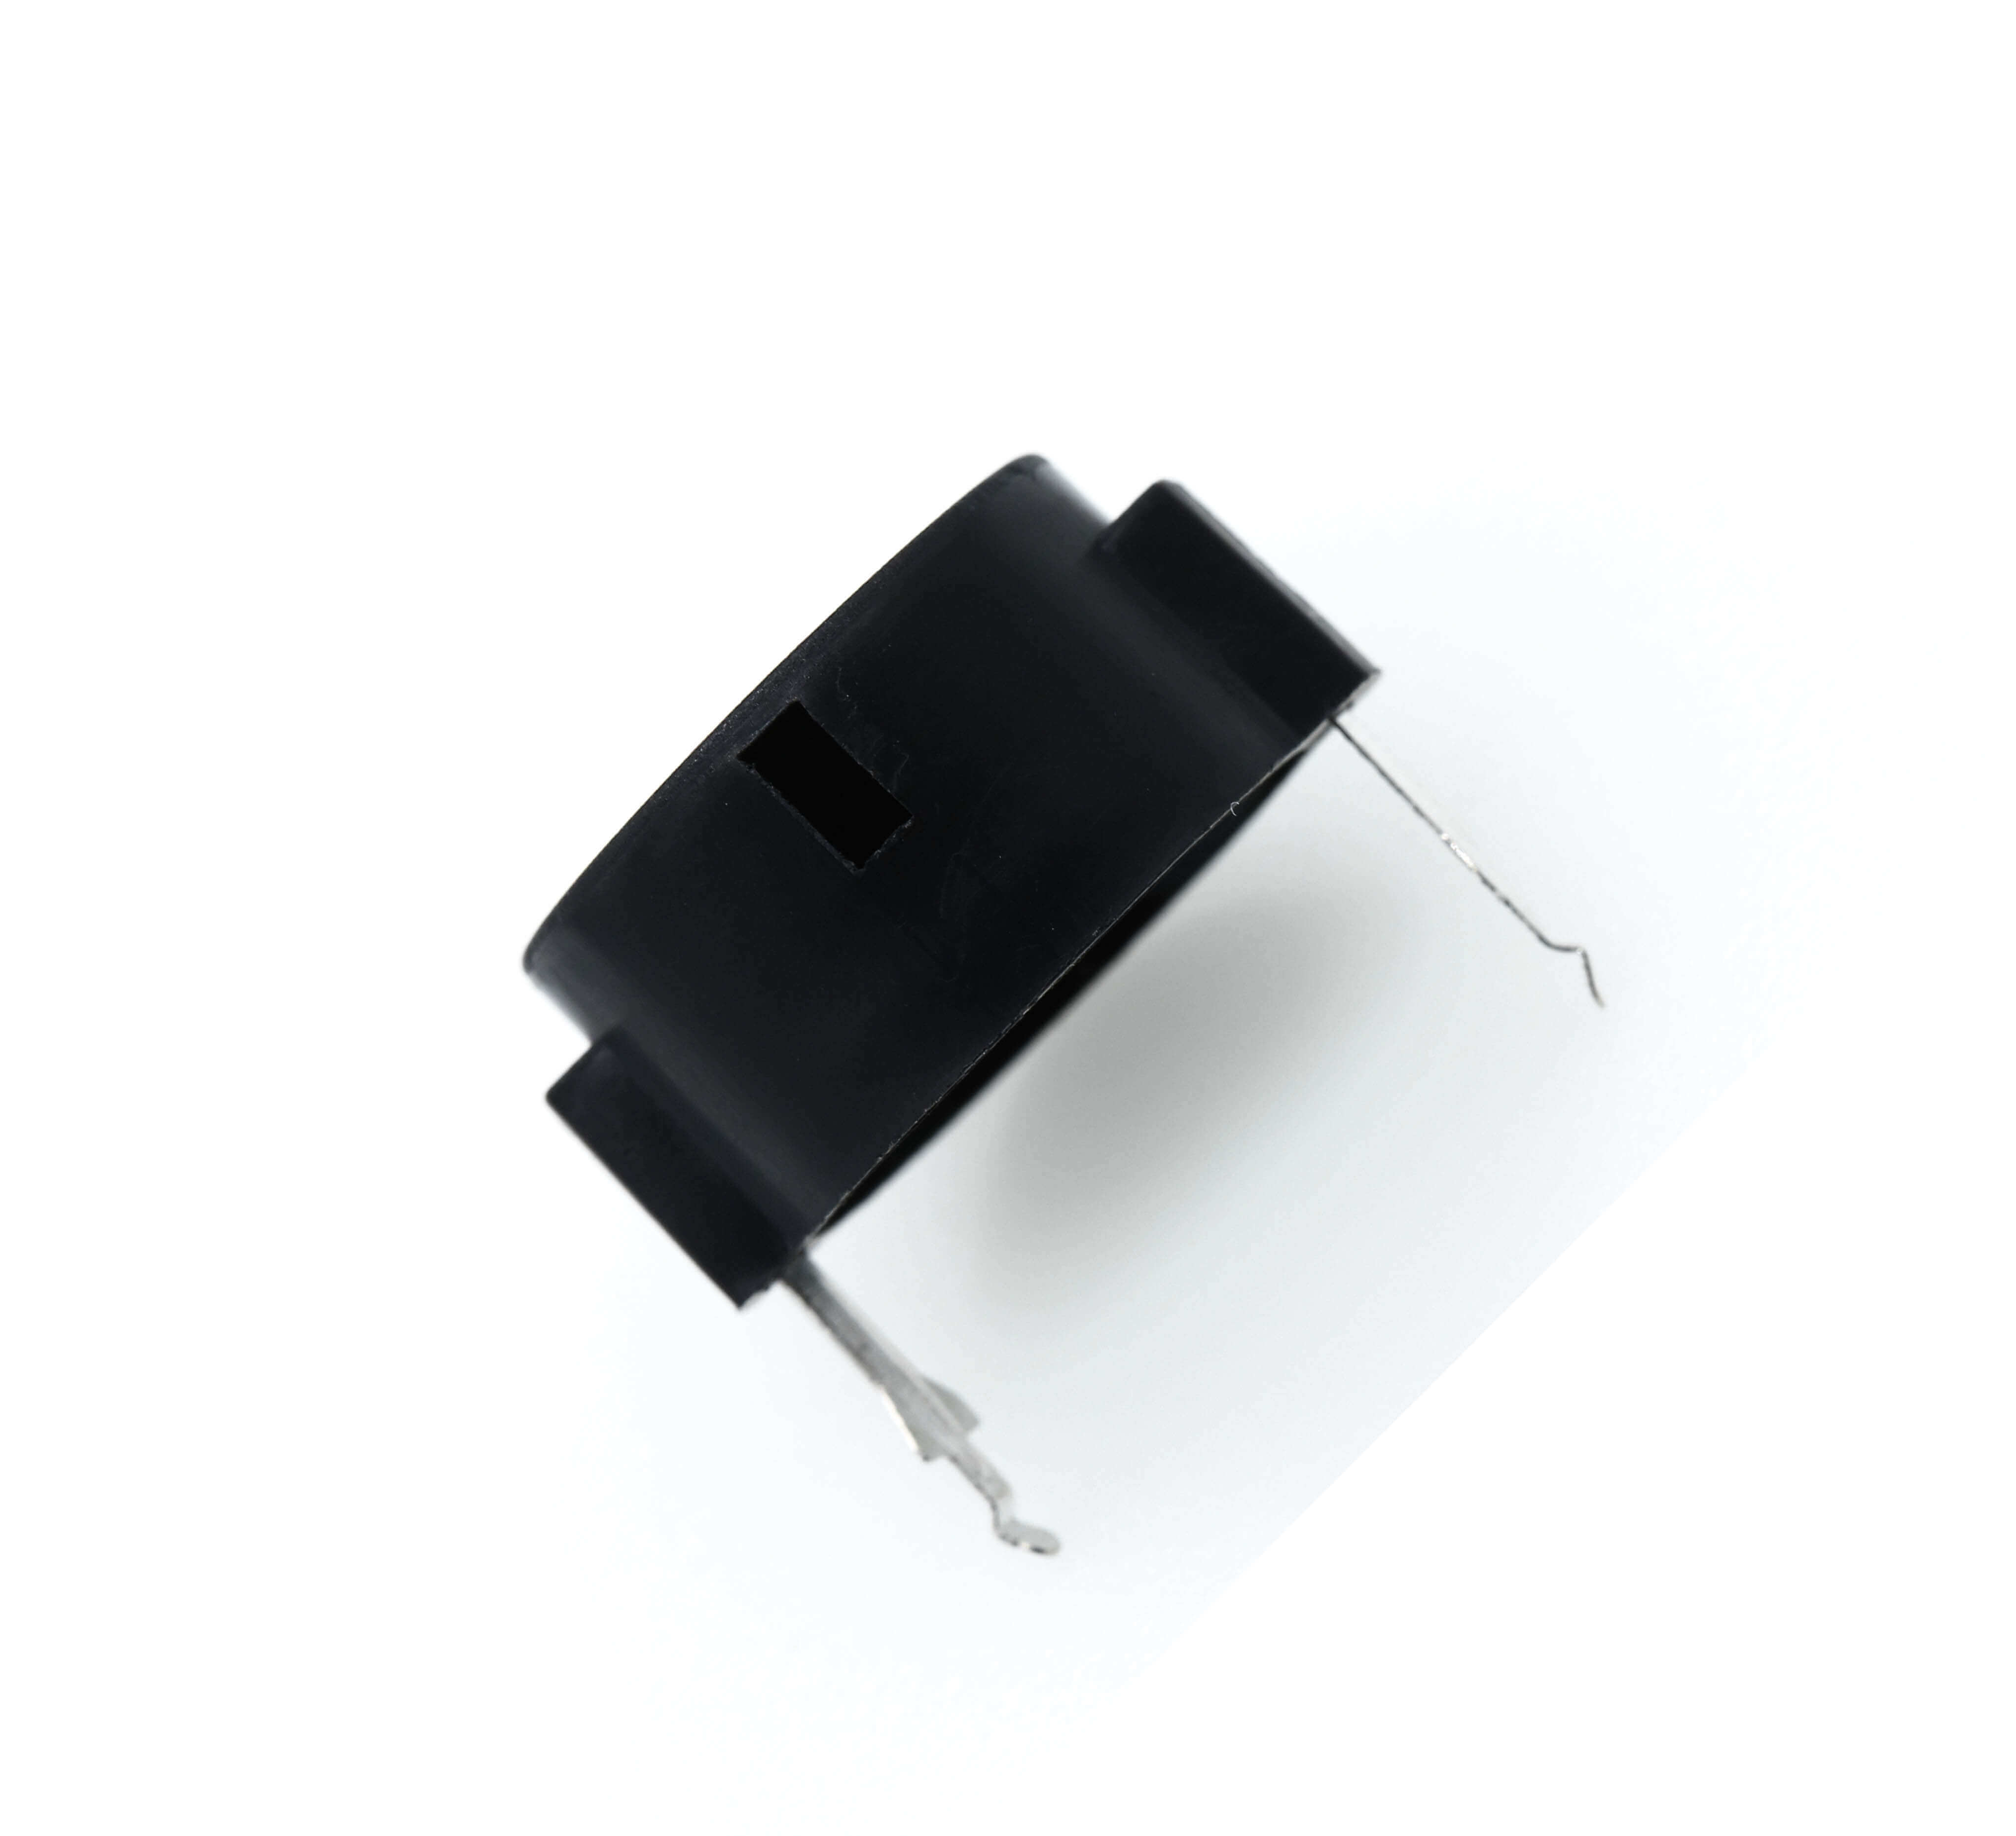 Pinout de zumbador piezoeléctrico pasivo de 19 mm para electrodomésticos